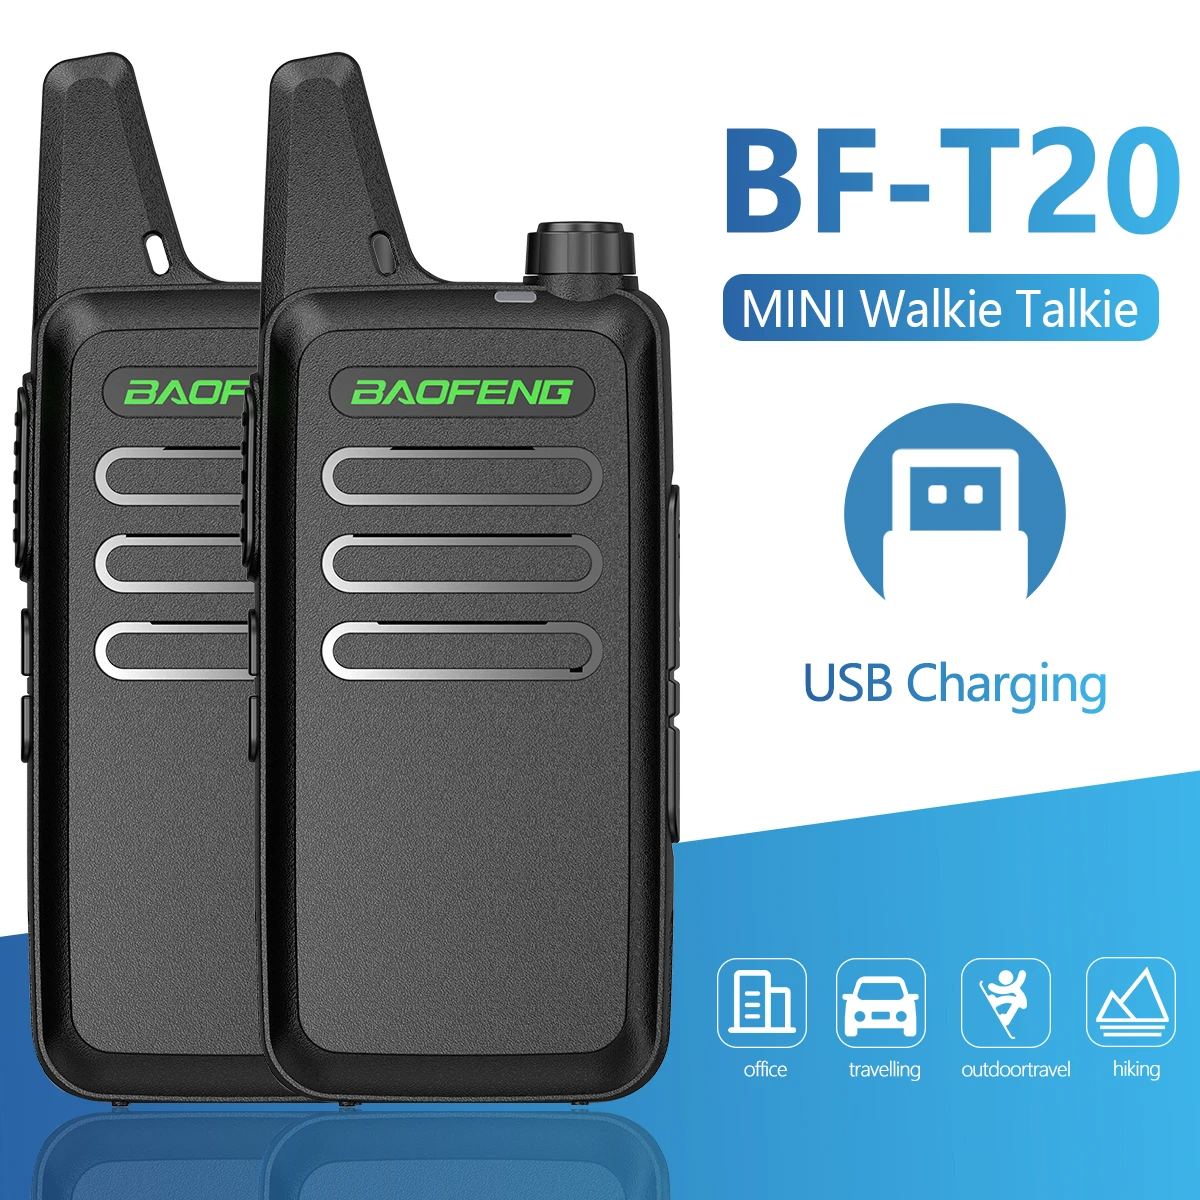 2pcs Baofeng BF-T20 Mini Walkie Talkie UHF 400-470mHz Support USB Charging 16 Channels Portable Radio BF-C9 BF-888S KD-C1 888s waterproof walkie talkies